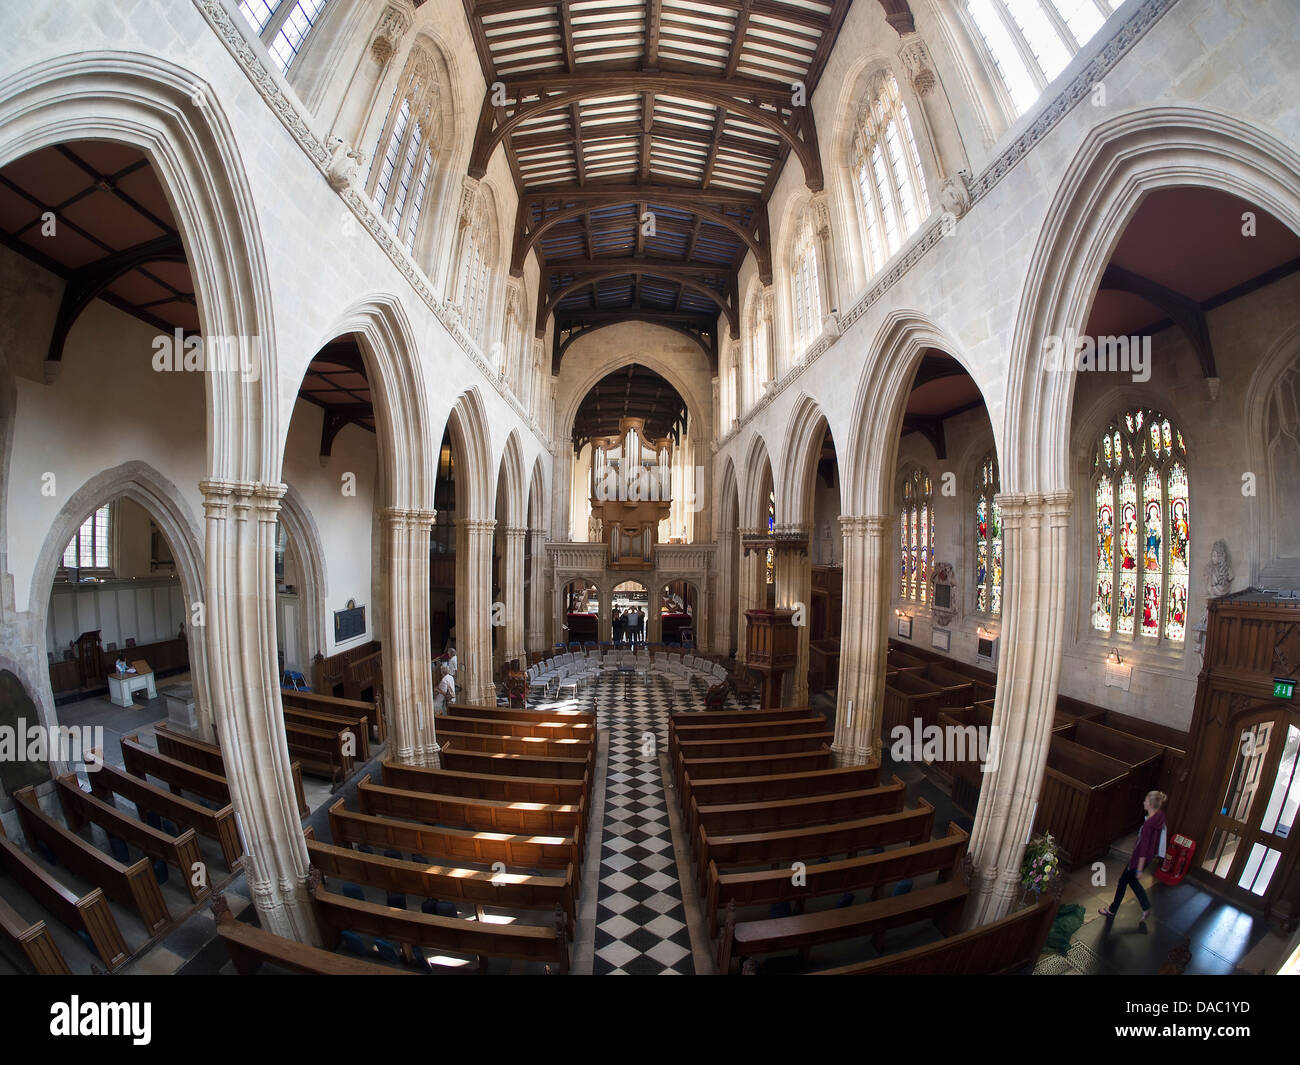 El interior de la iglesia de Saint Mary's, Oxford - fisheye View 5 Foto de stock